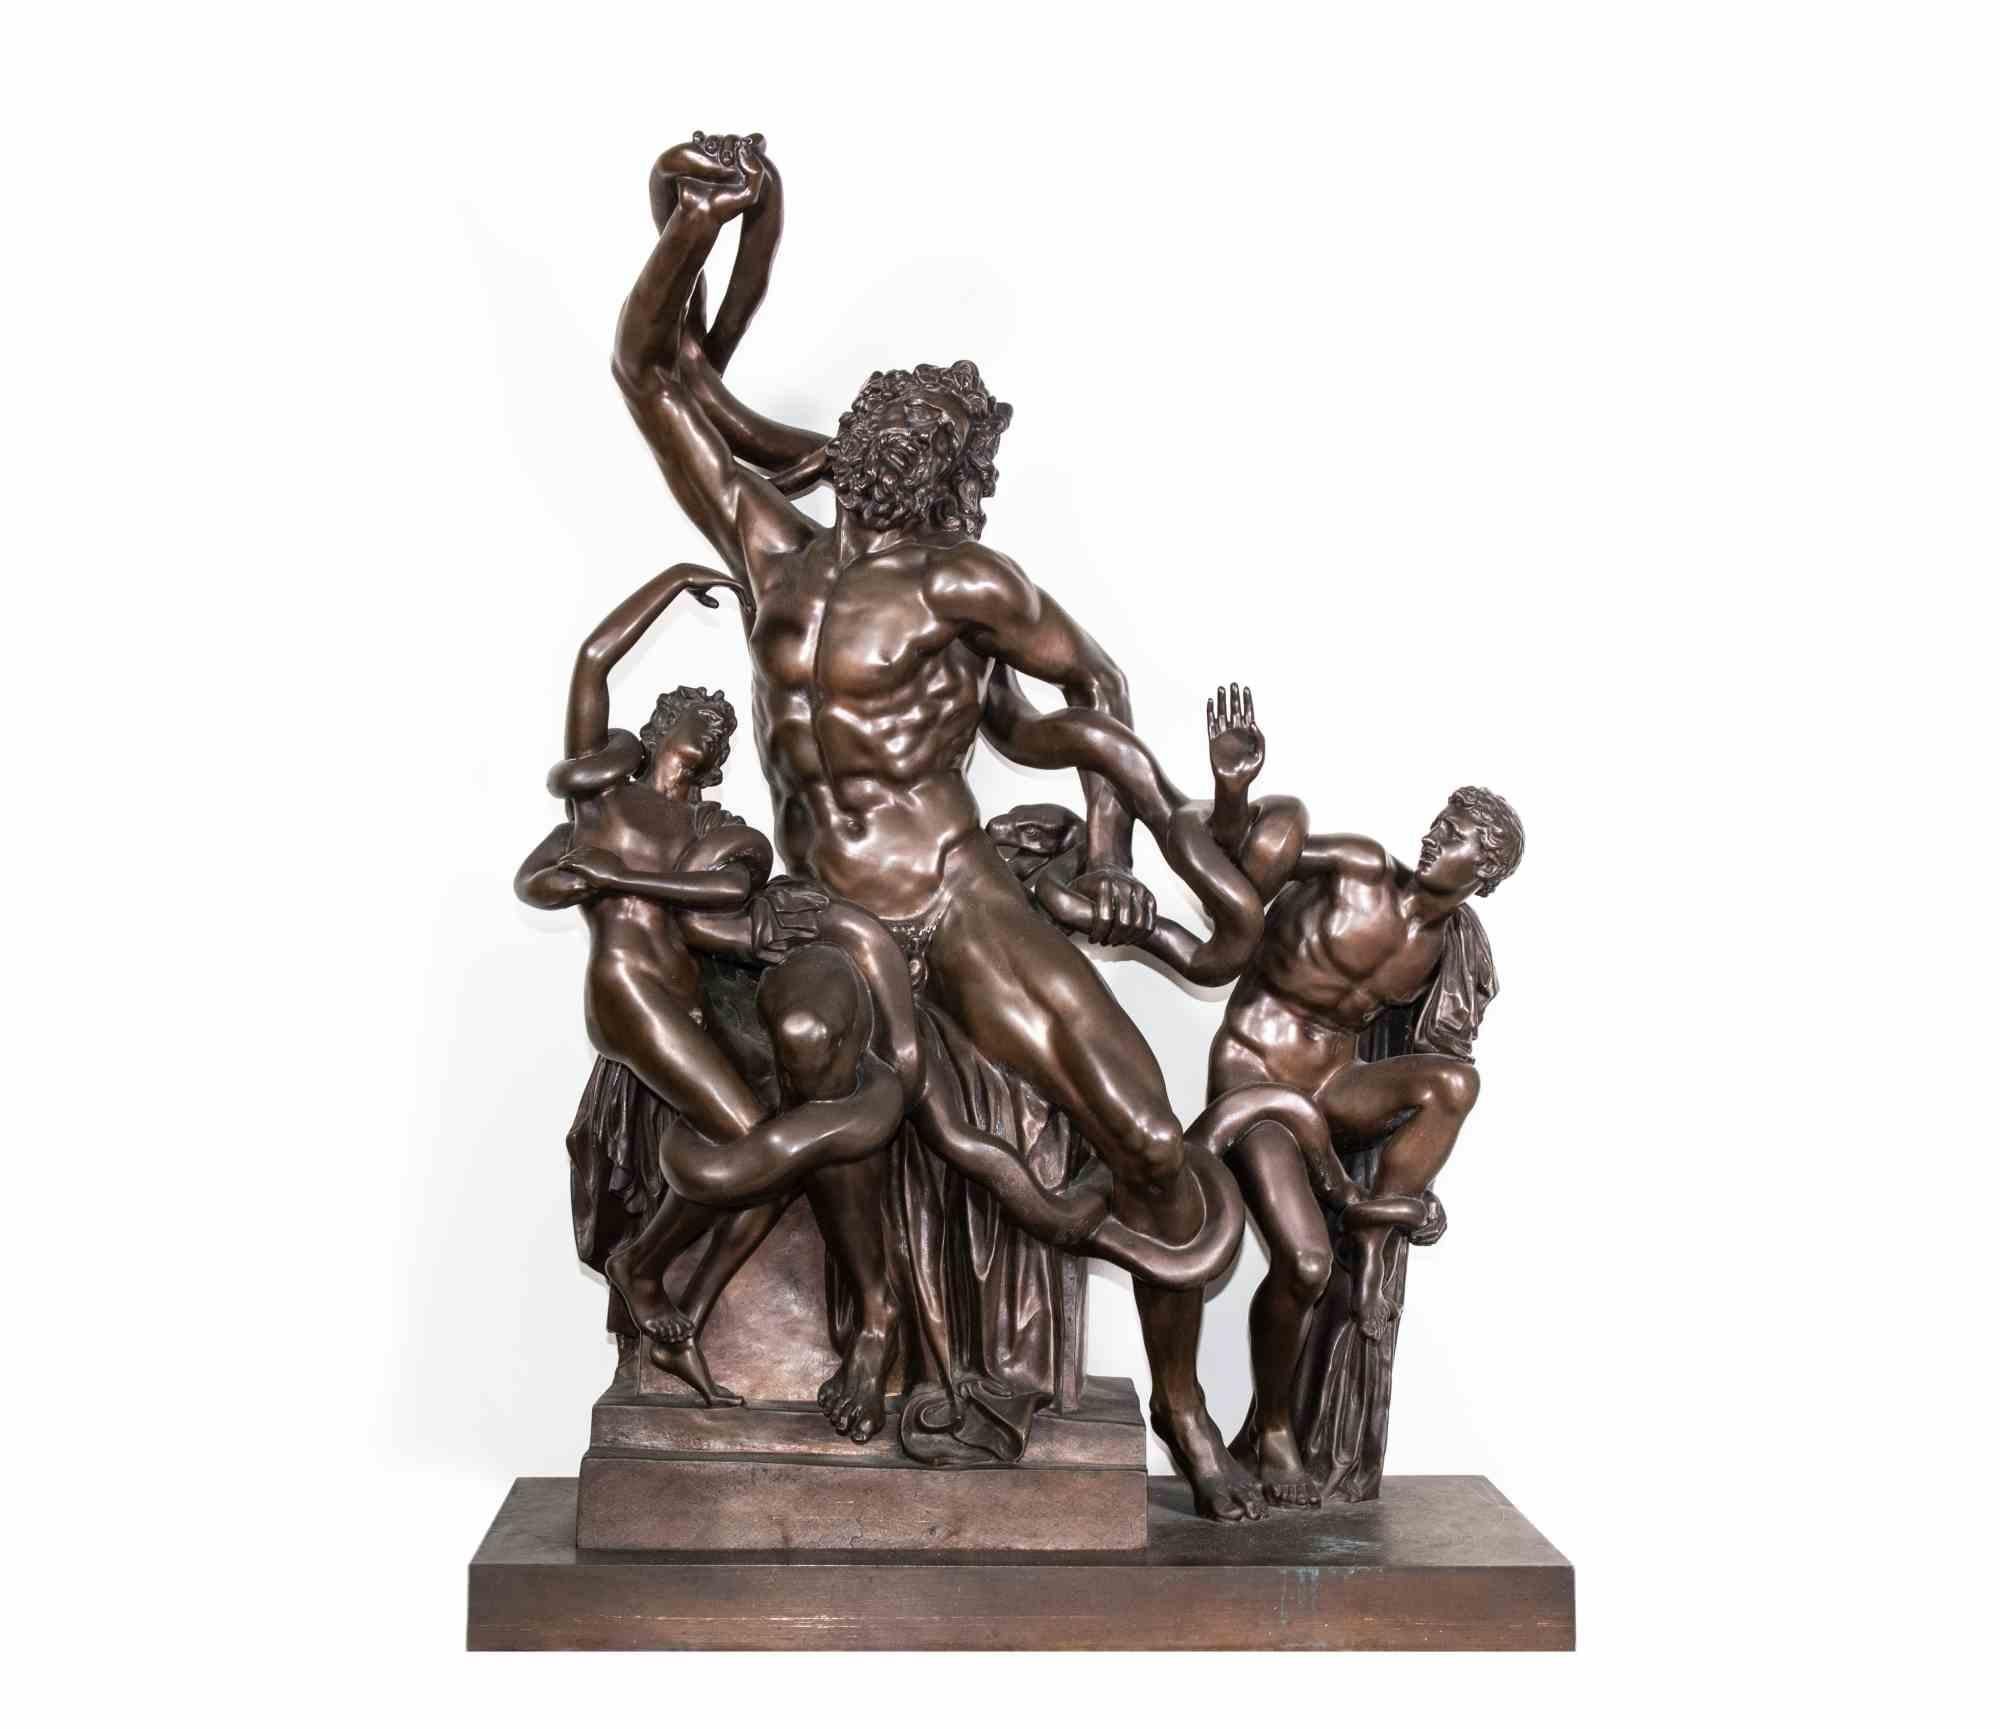 Ferdinand Barbedienne Figurative Sculpture - Laocoon Group - Bronze Sculpture by F. Barbedienne - 19th Century